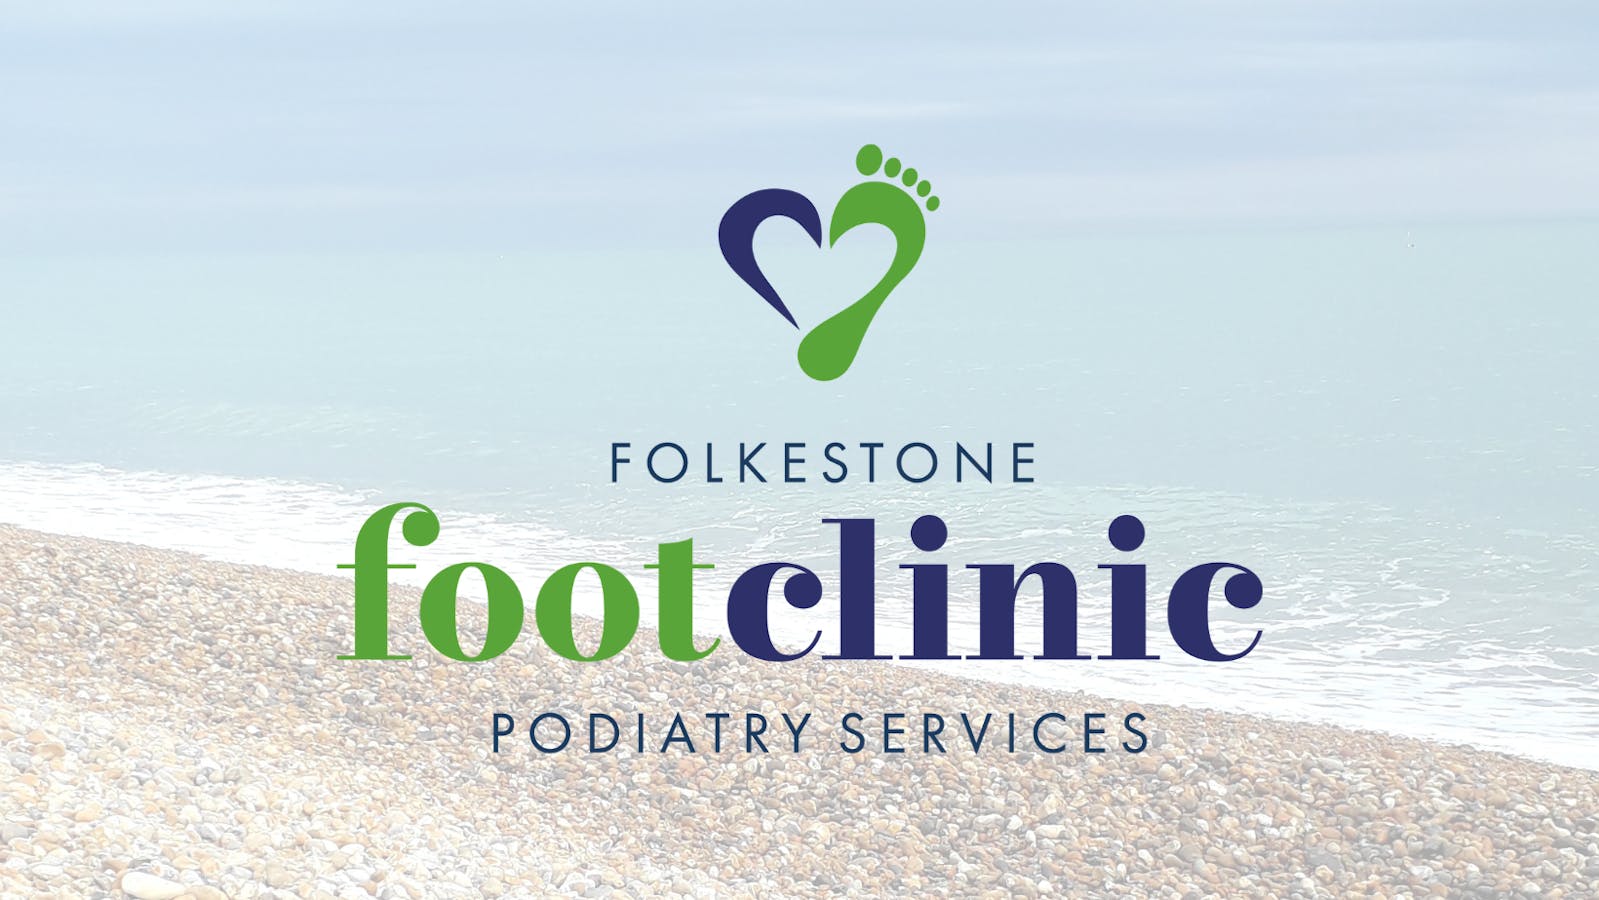 Folkestone Foot clinic banner